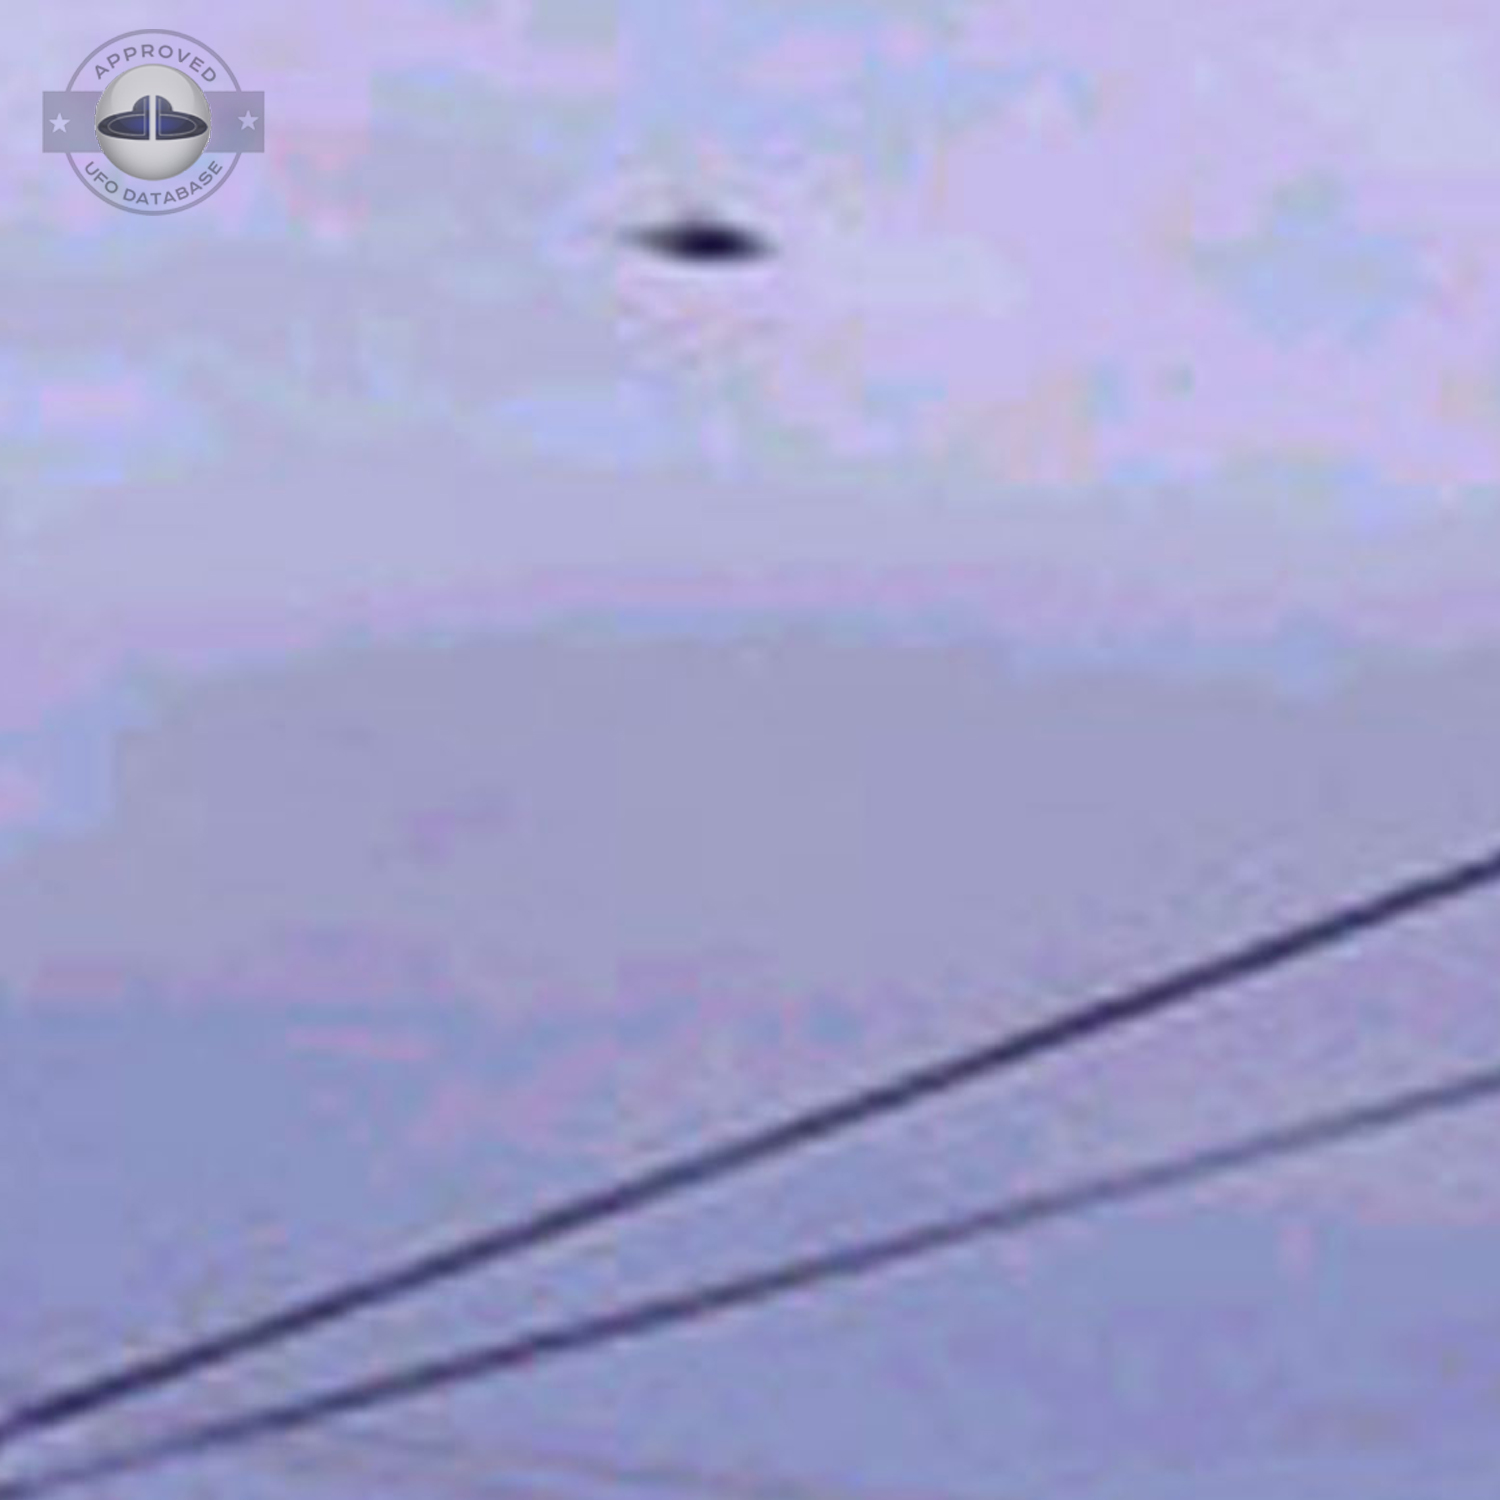 UFO over electric line in grey sky - UFO picture taken in Valcheta UFO Picture #20-2